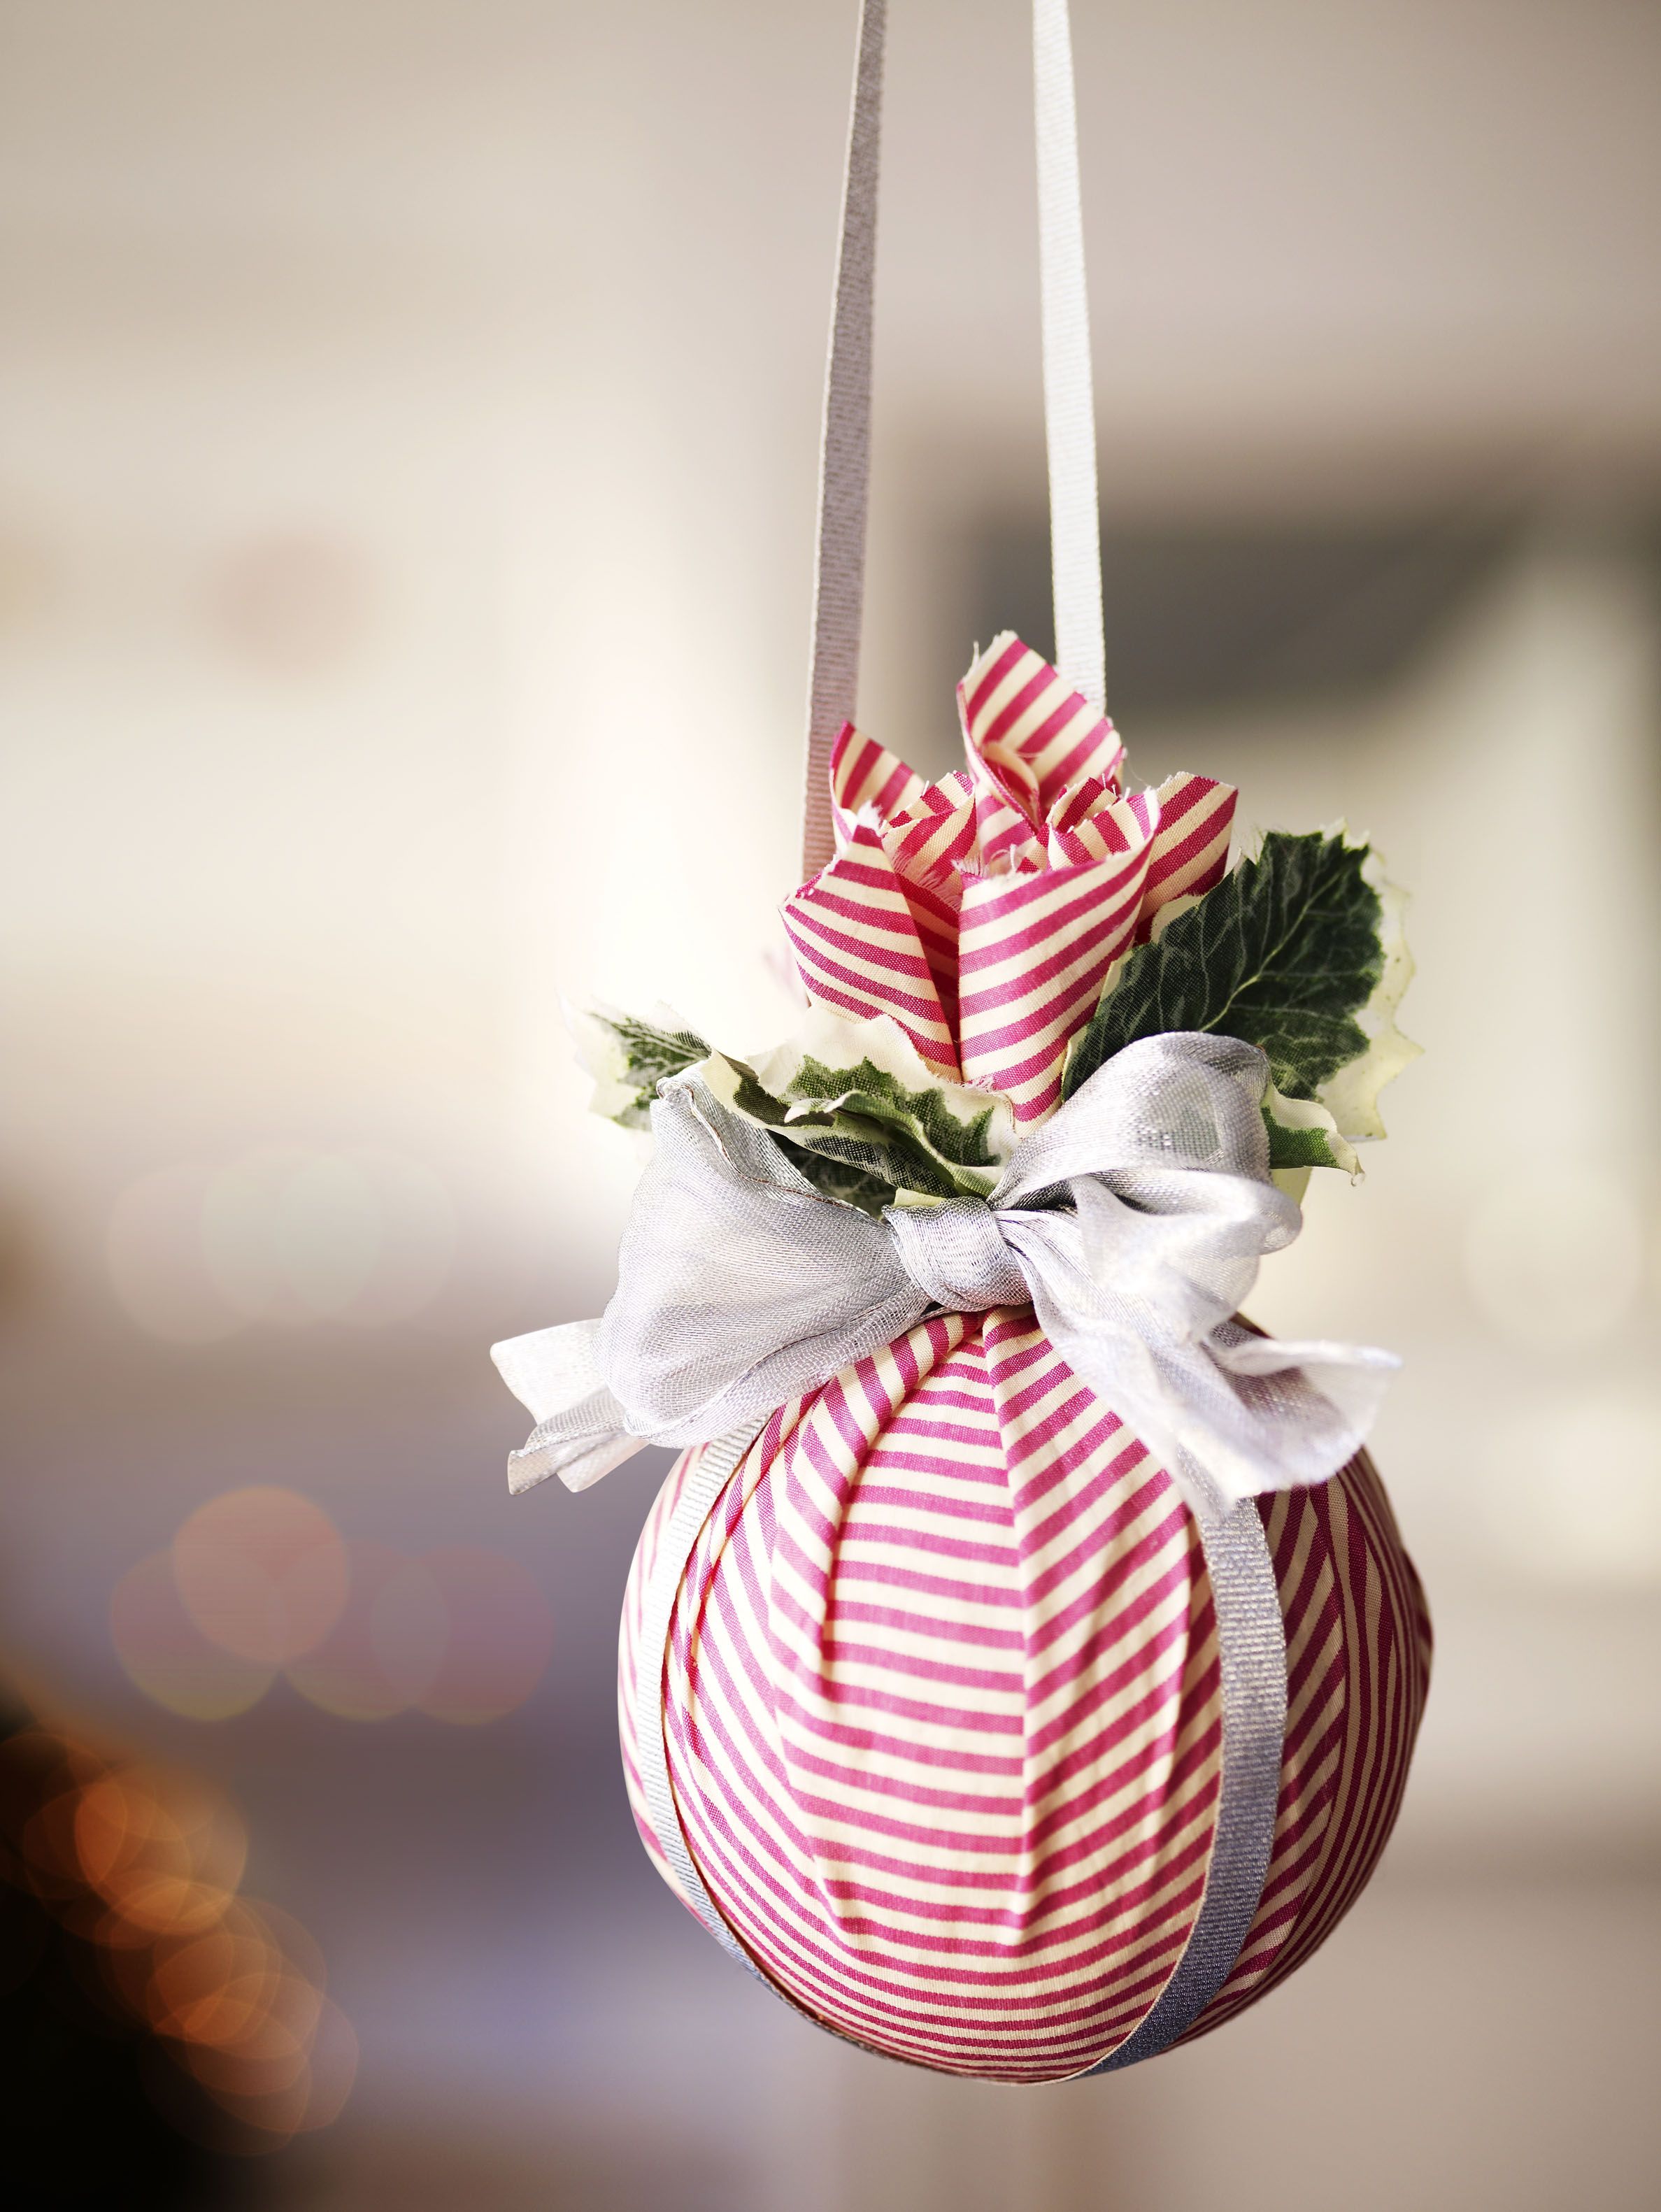 78 Homemade Christmas Ornaments Diy Handmade Holiday Tree Ornament Craft Ideas